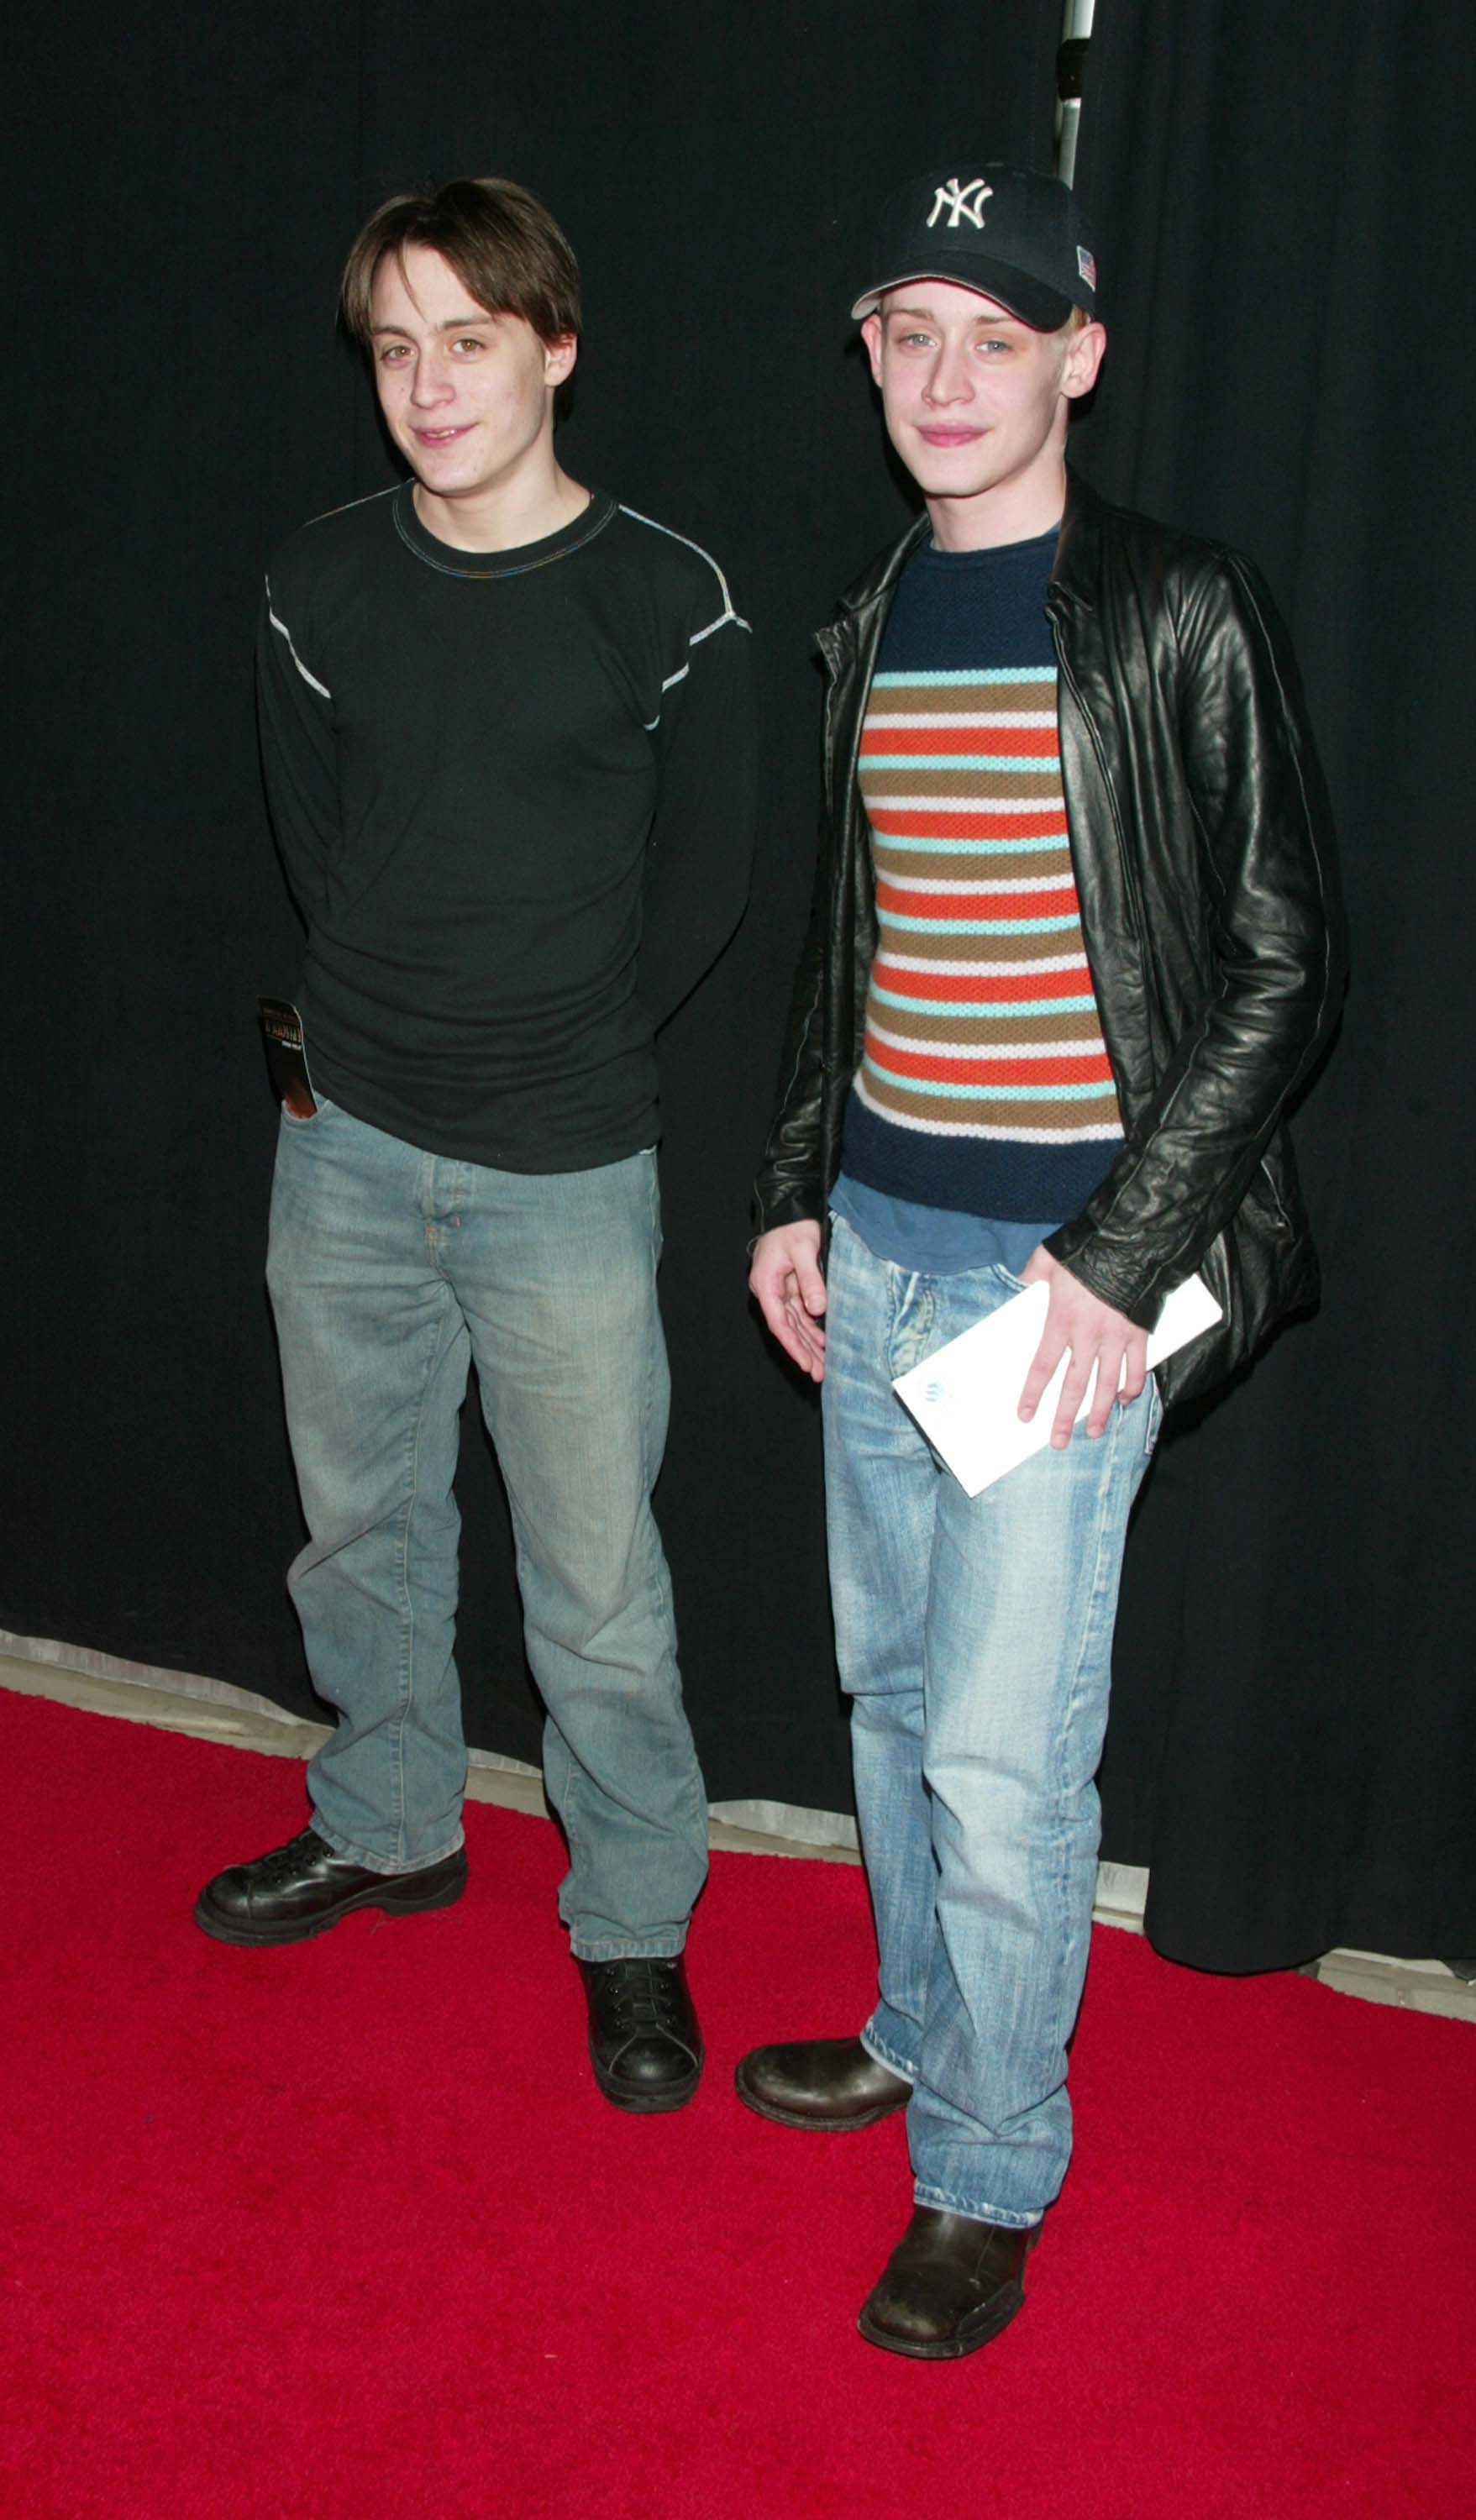 Kieran Culkin and Macaulay Culkin in New York City, New York, United States. | Source: Getty Images